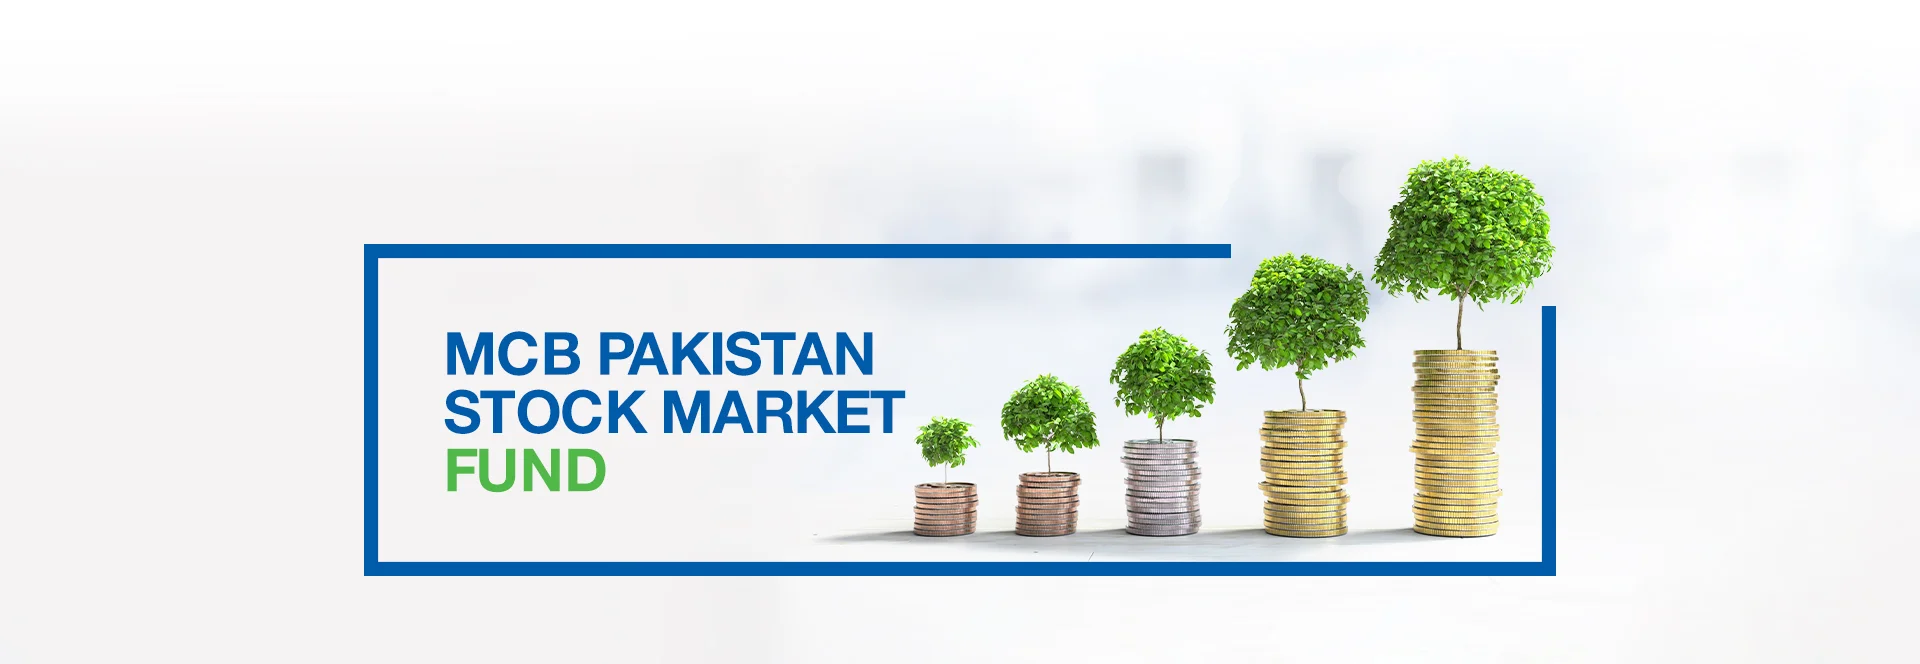 MCB Pakistan Stock Market Fund